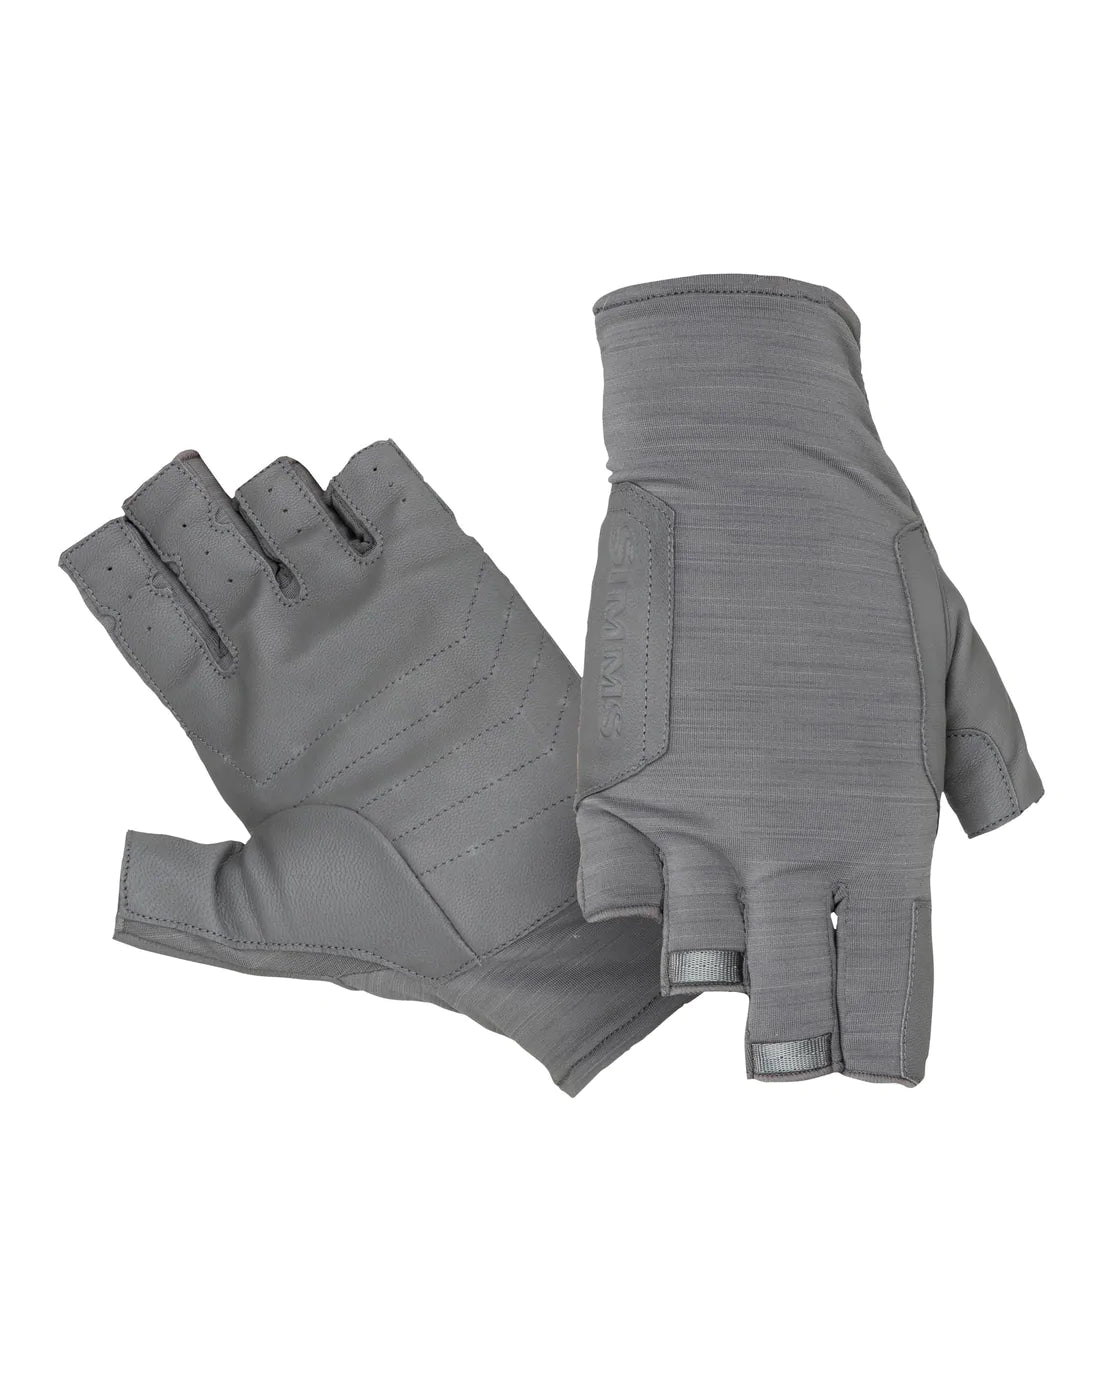 Simms Men's SolarFlex Guide Glove